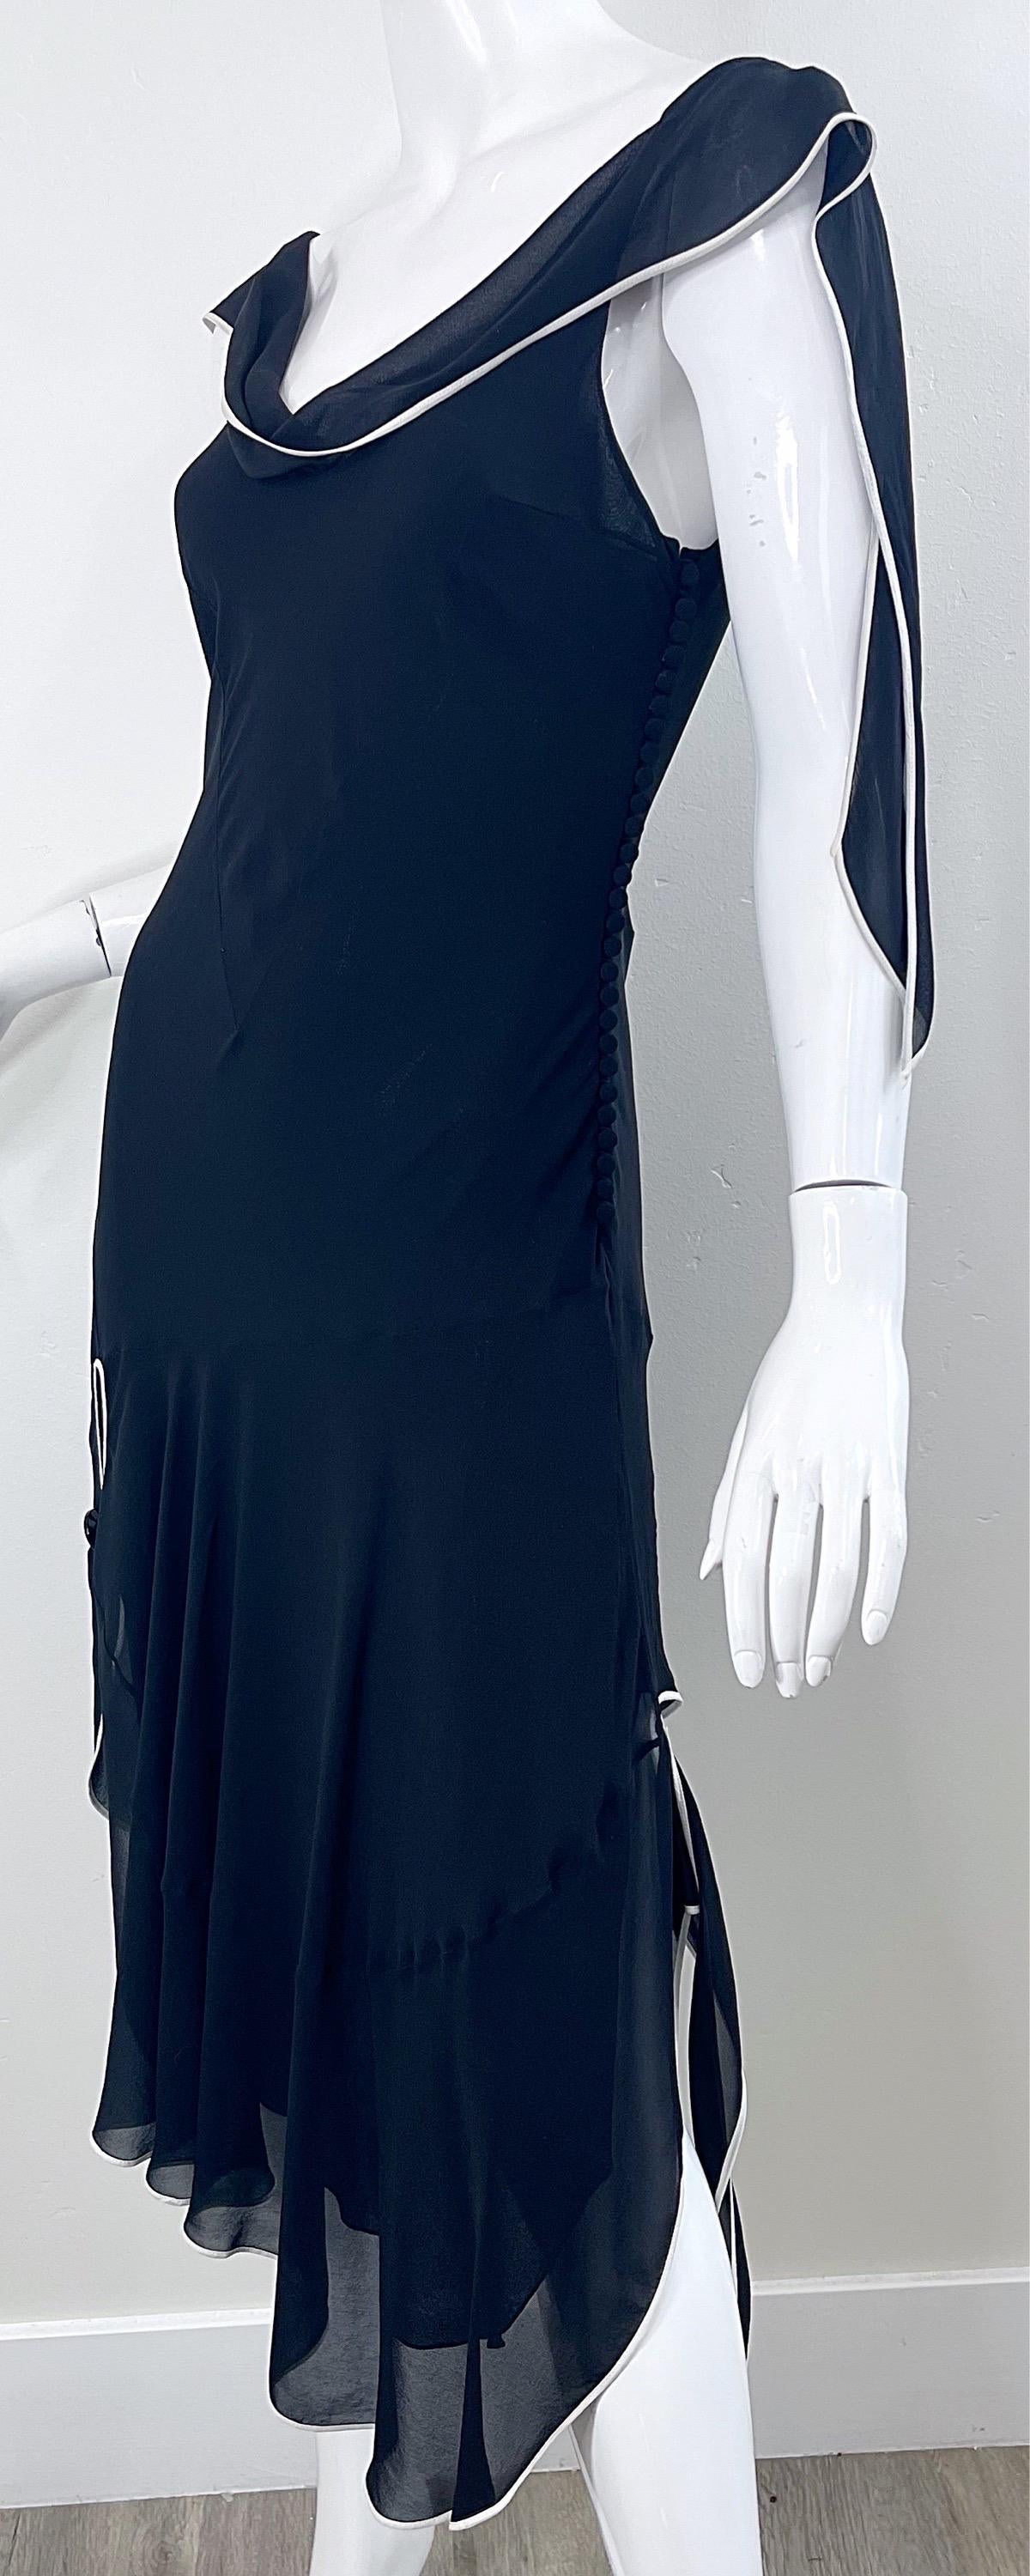 Women's Christian Dior by John Galliano S/S 2005 Size 6 Black White Silk Chiffon Dress For Sale